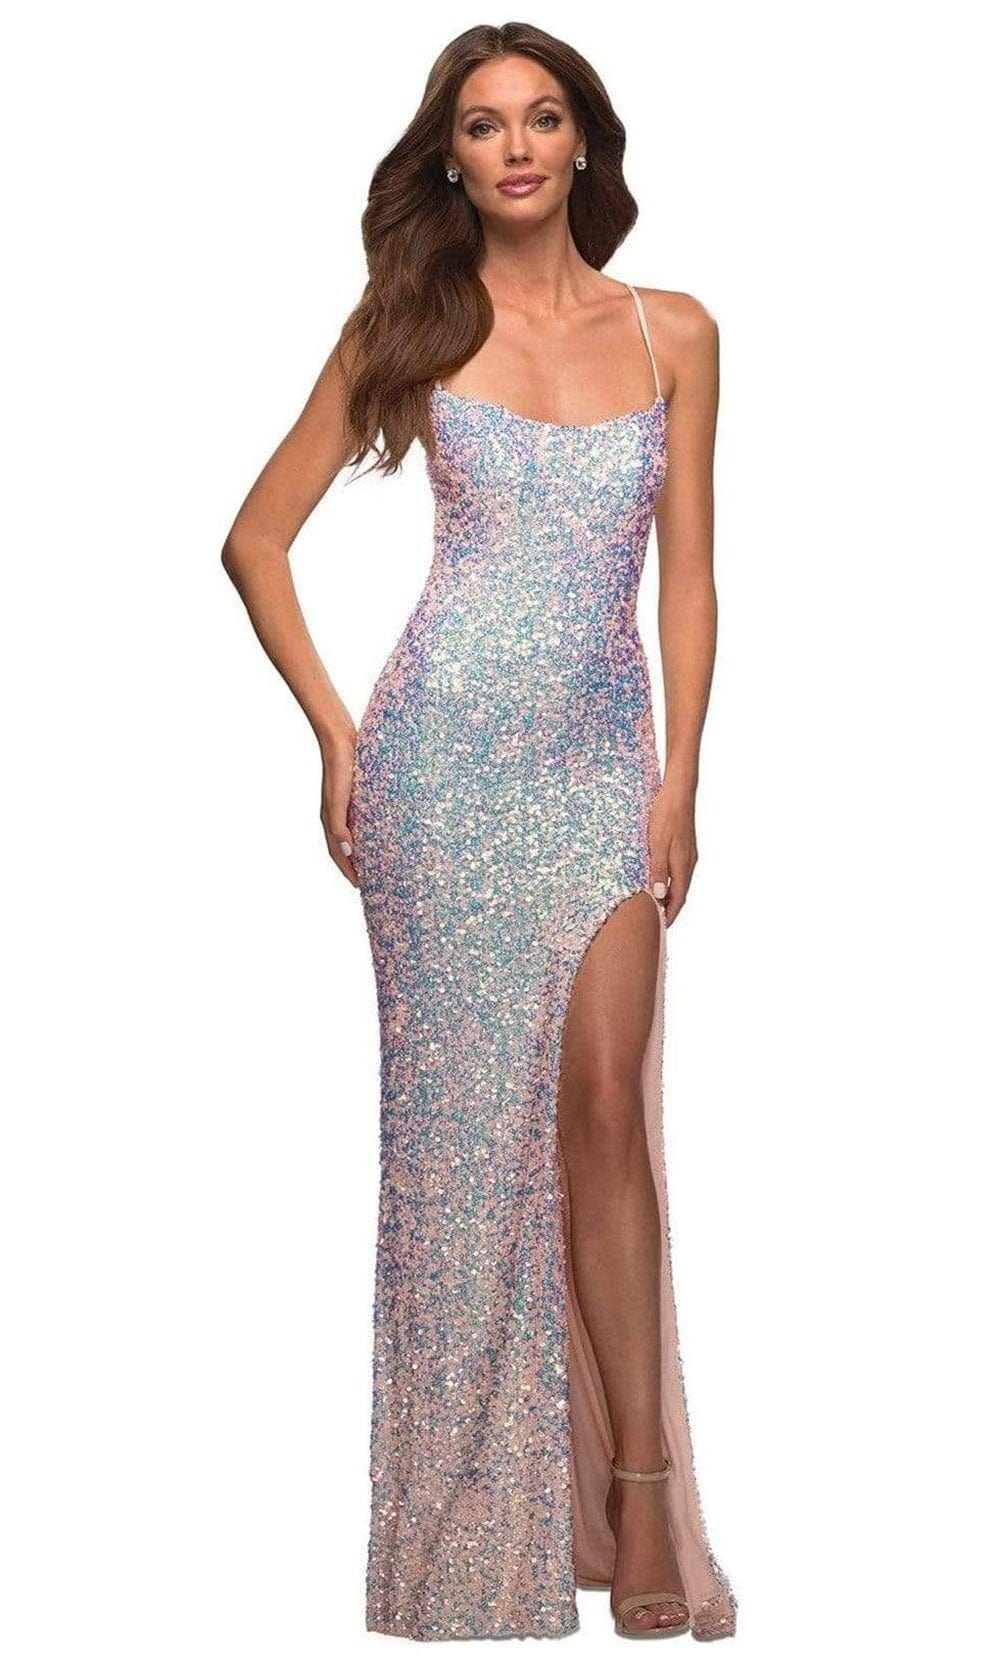 La Femme - 30371 Multicolor Sequined Slit Dress
